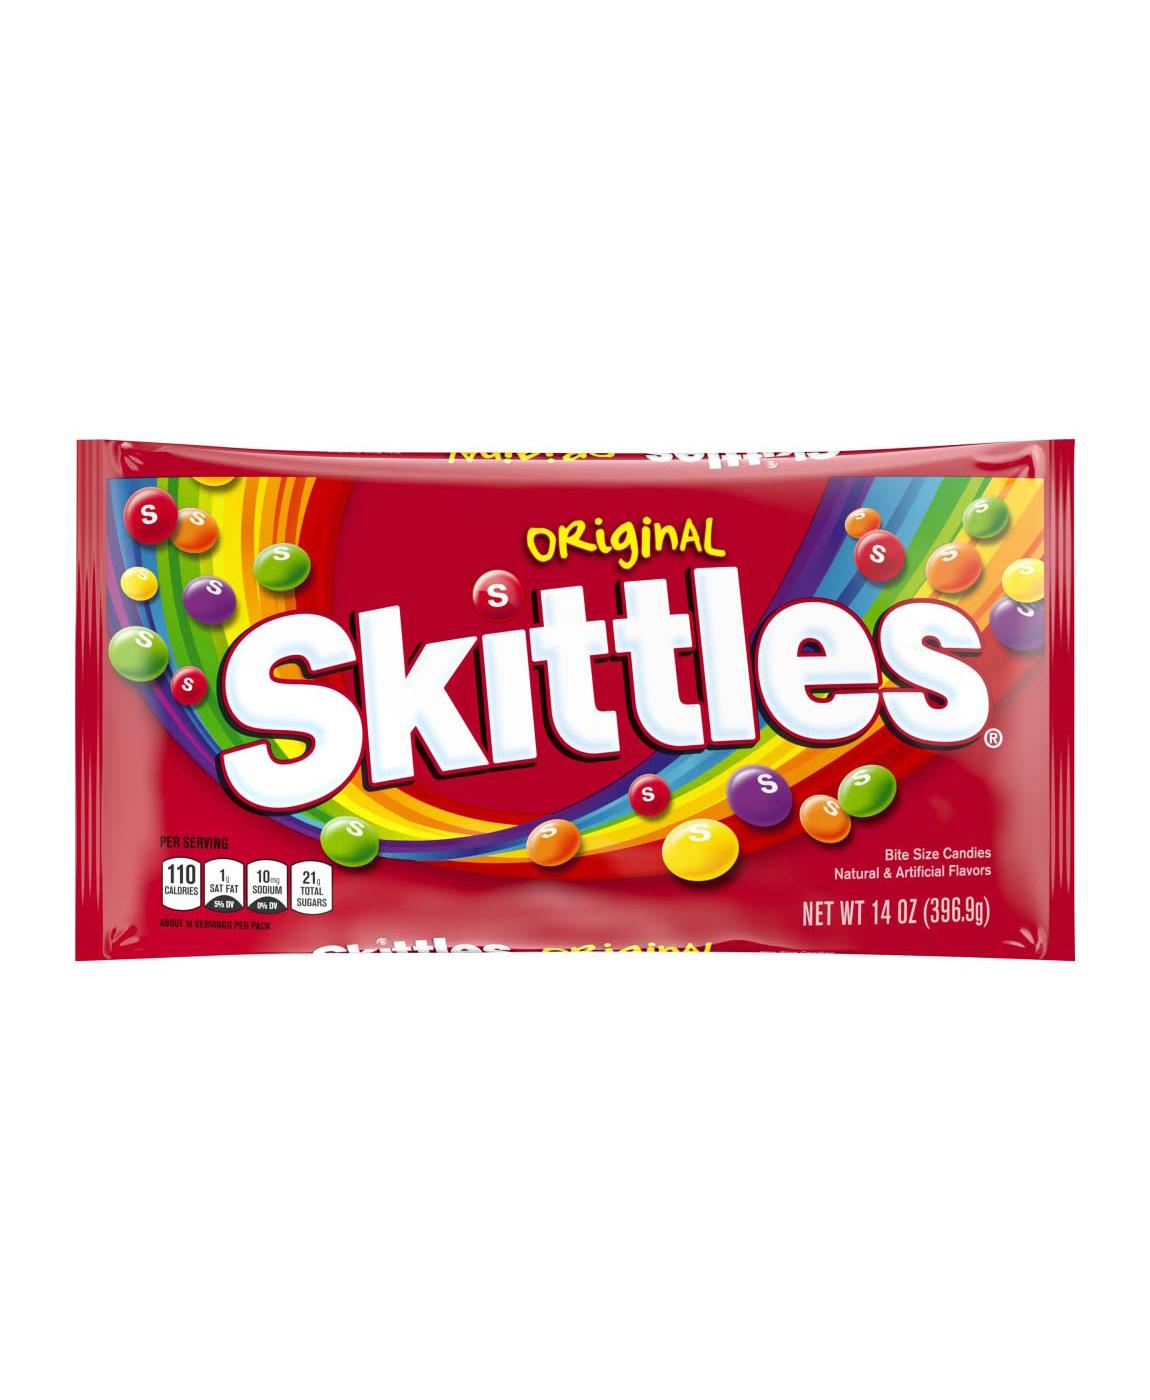 Skittles Original Candy Bag; image 1 of 11